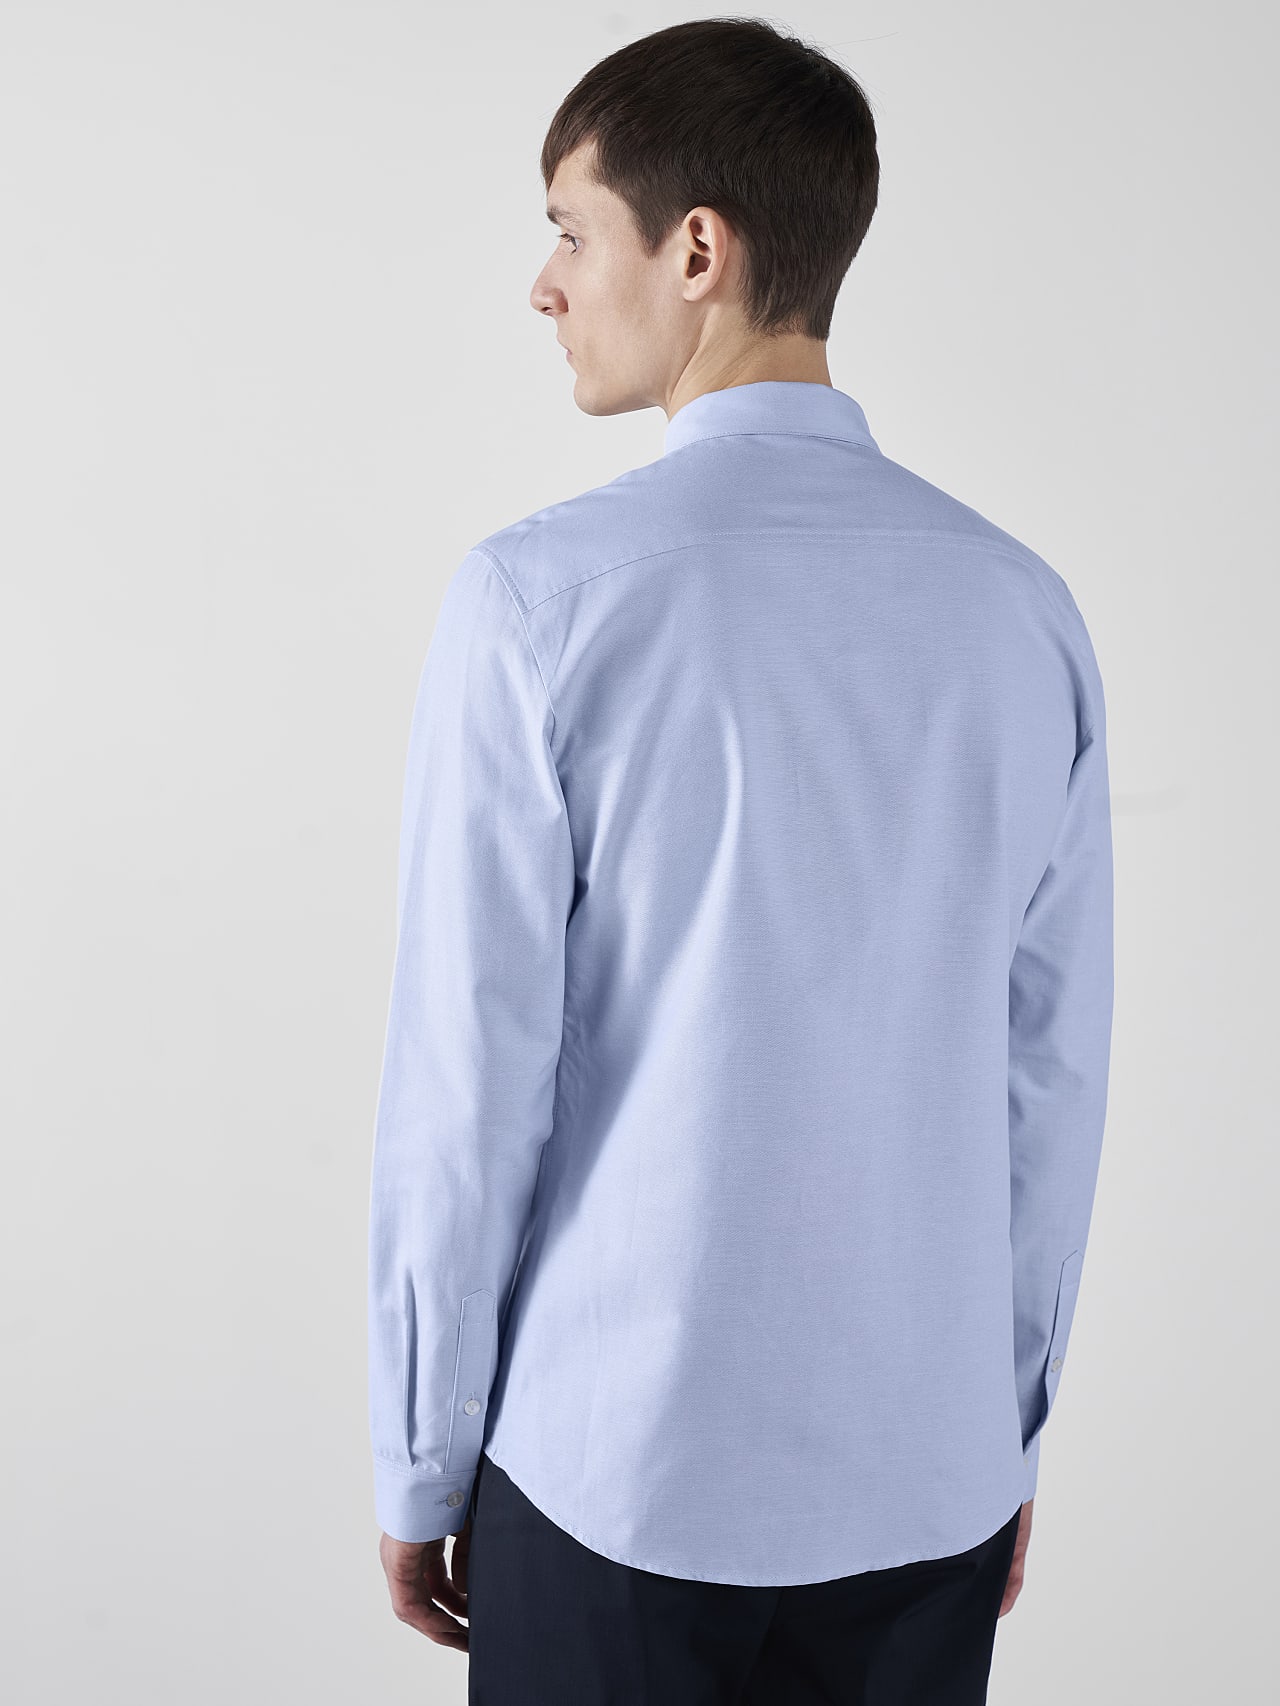 AlphaTauri | WOSKA V2.Y5.01 | Kent Collar Oxford Shirt in light blue for Men